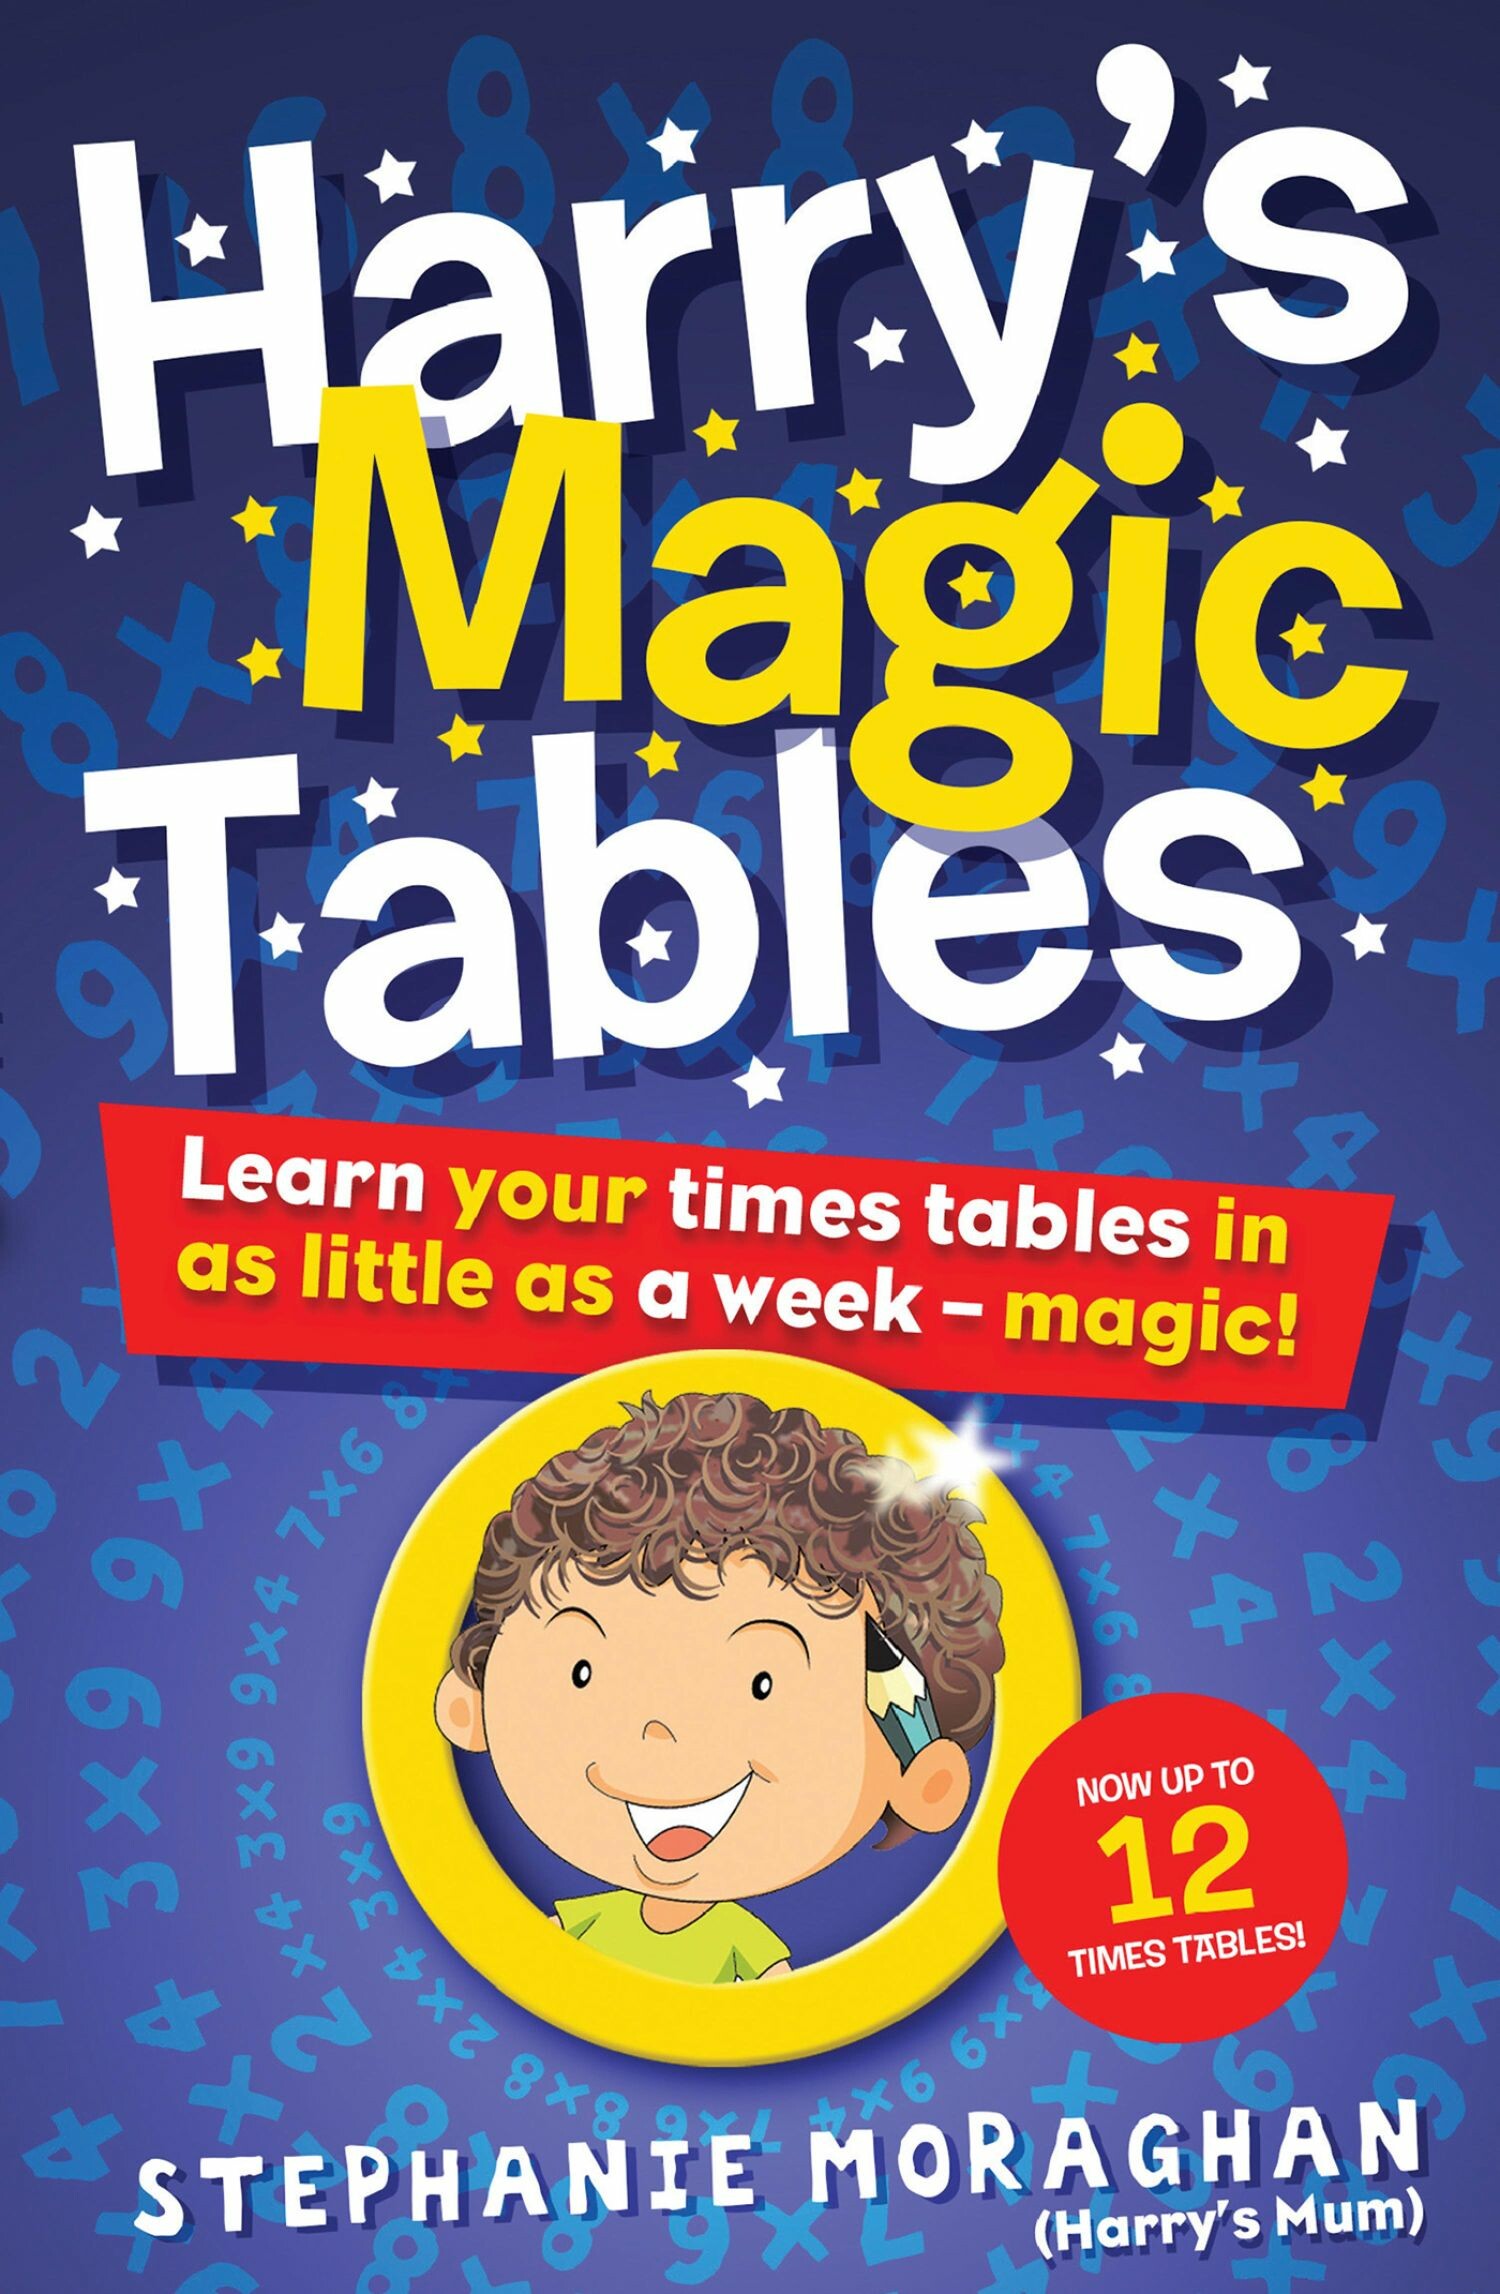 Harry's Magic Tables